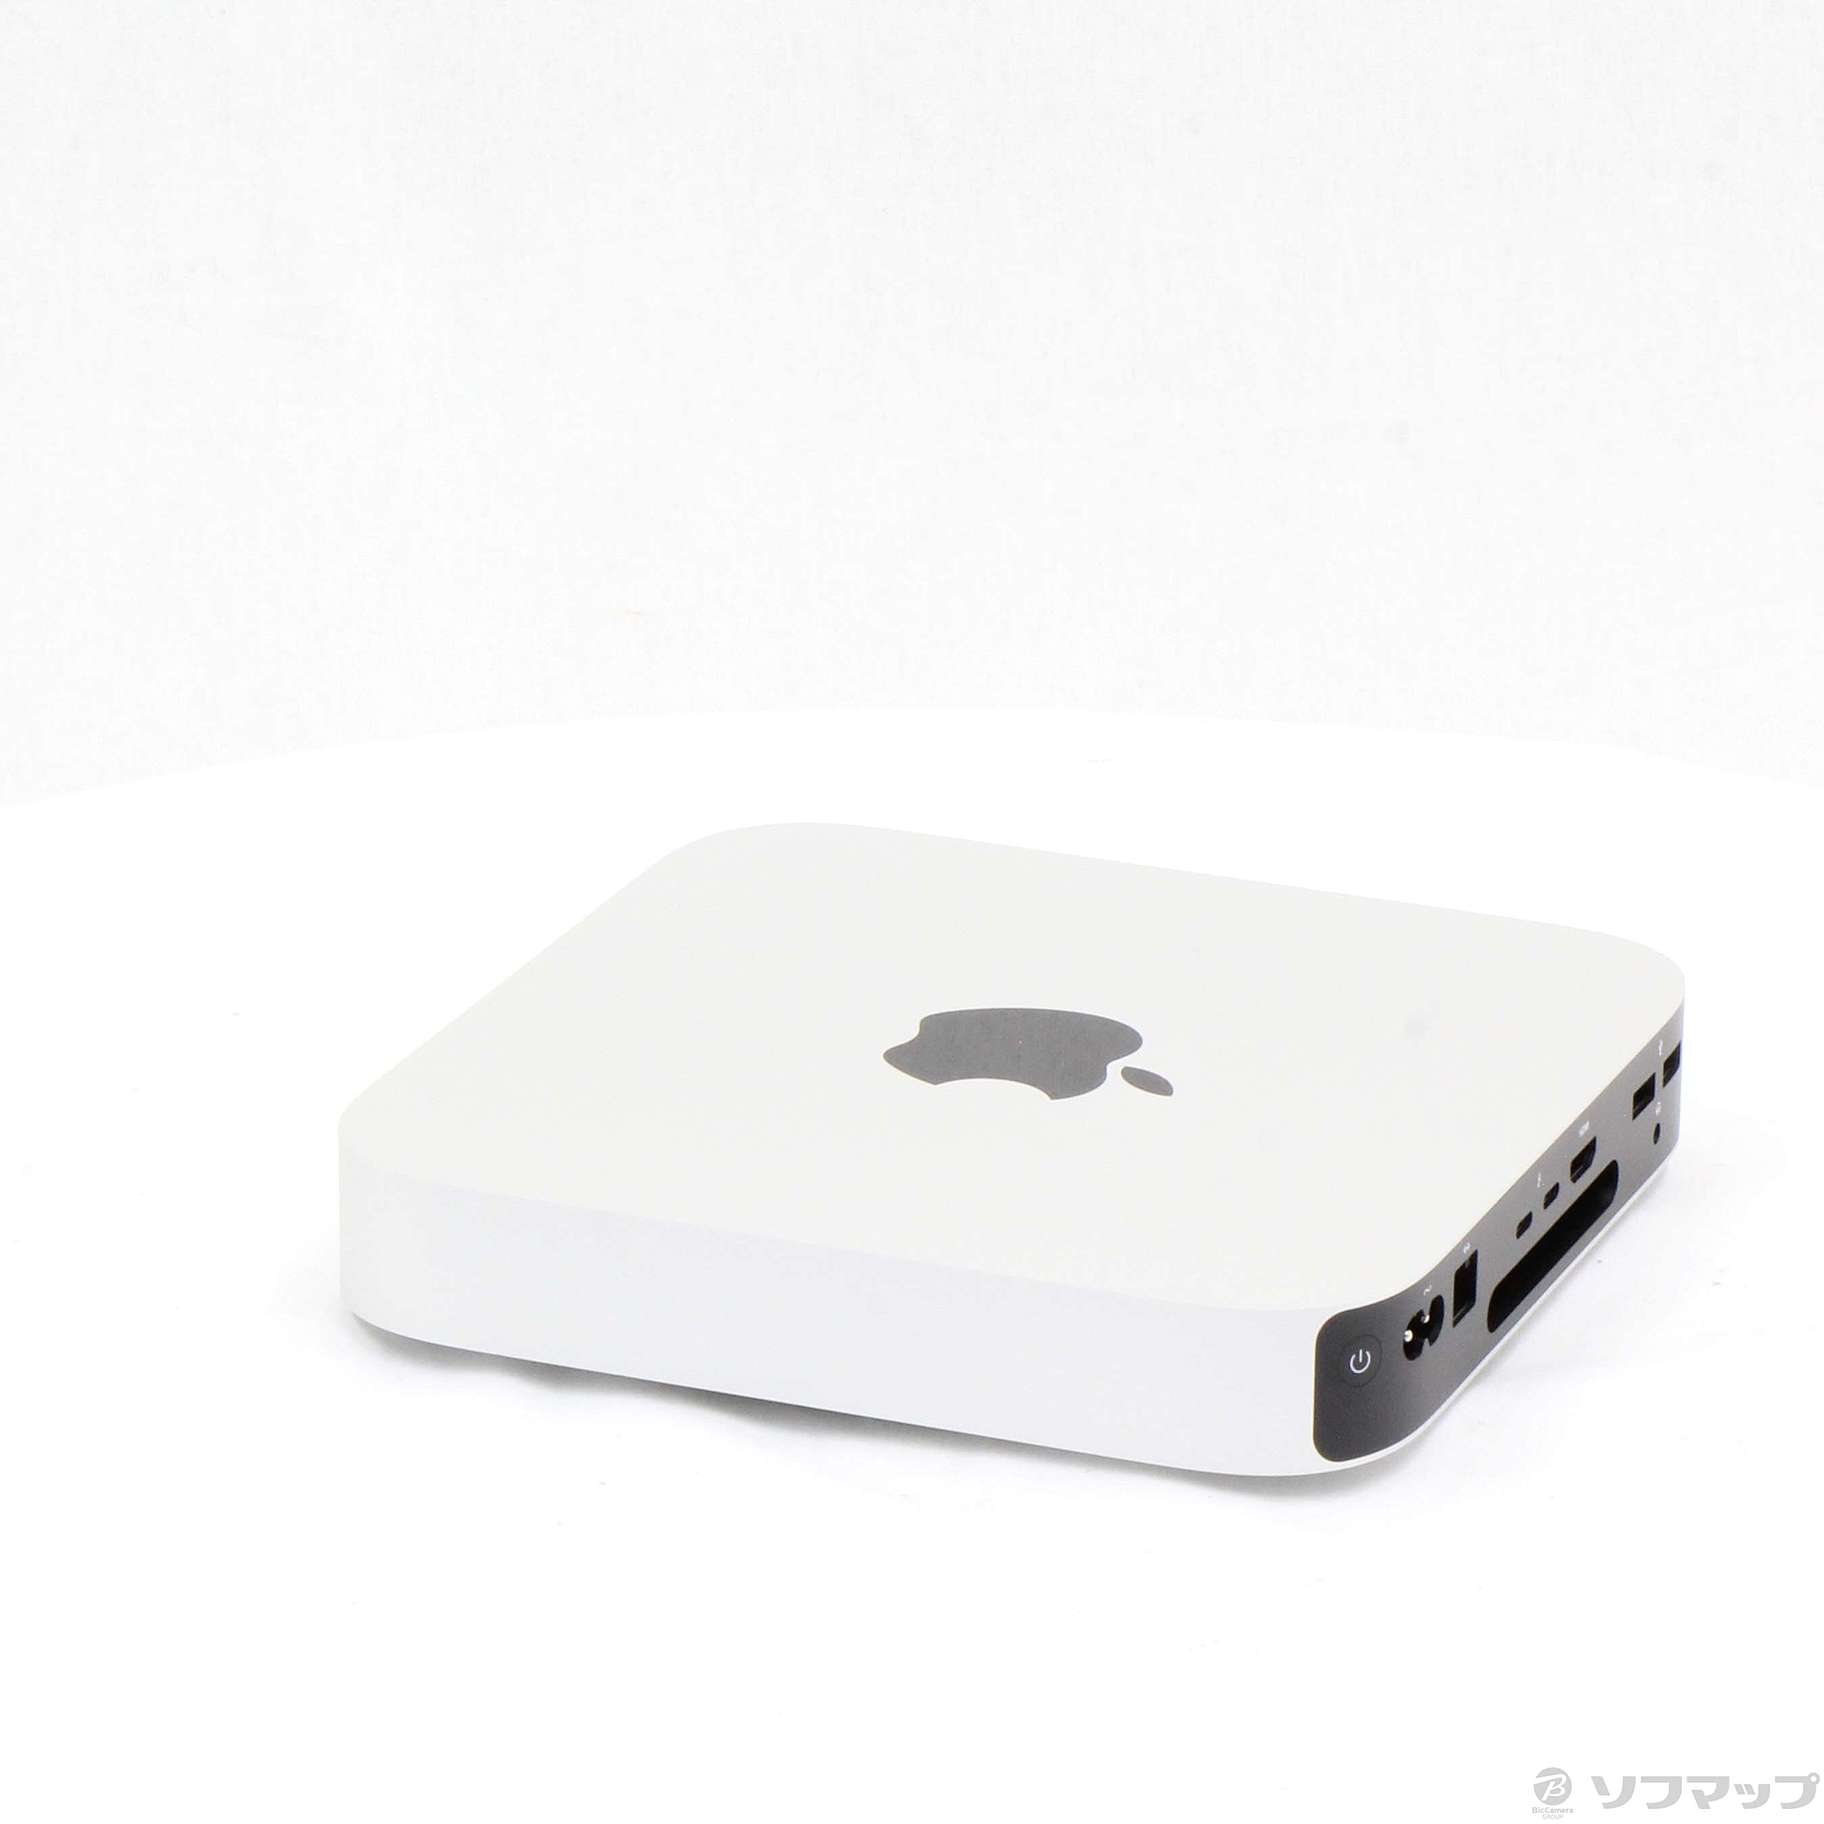 mac mini late 2012 for sale